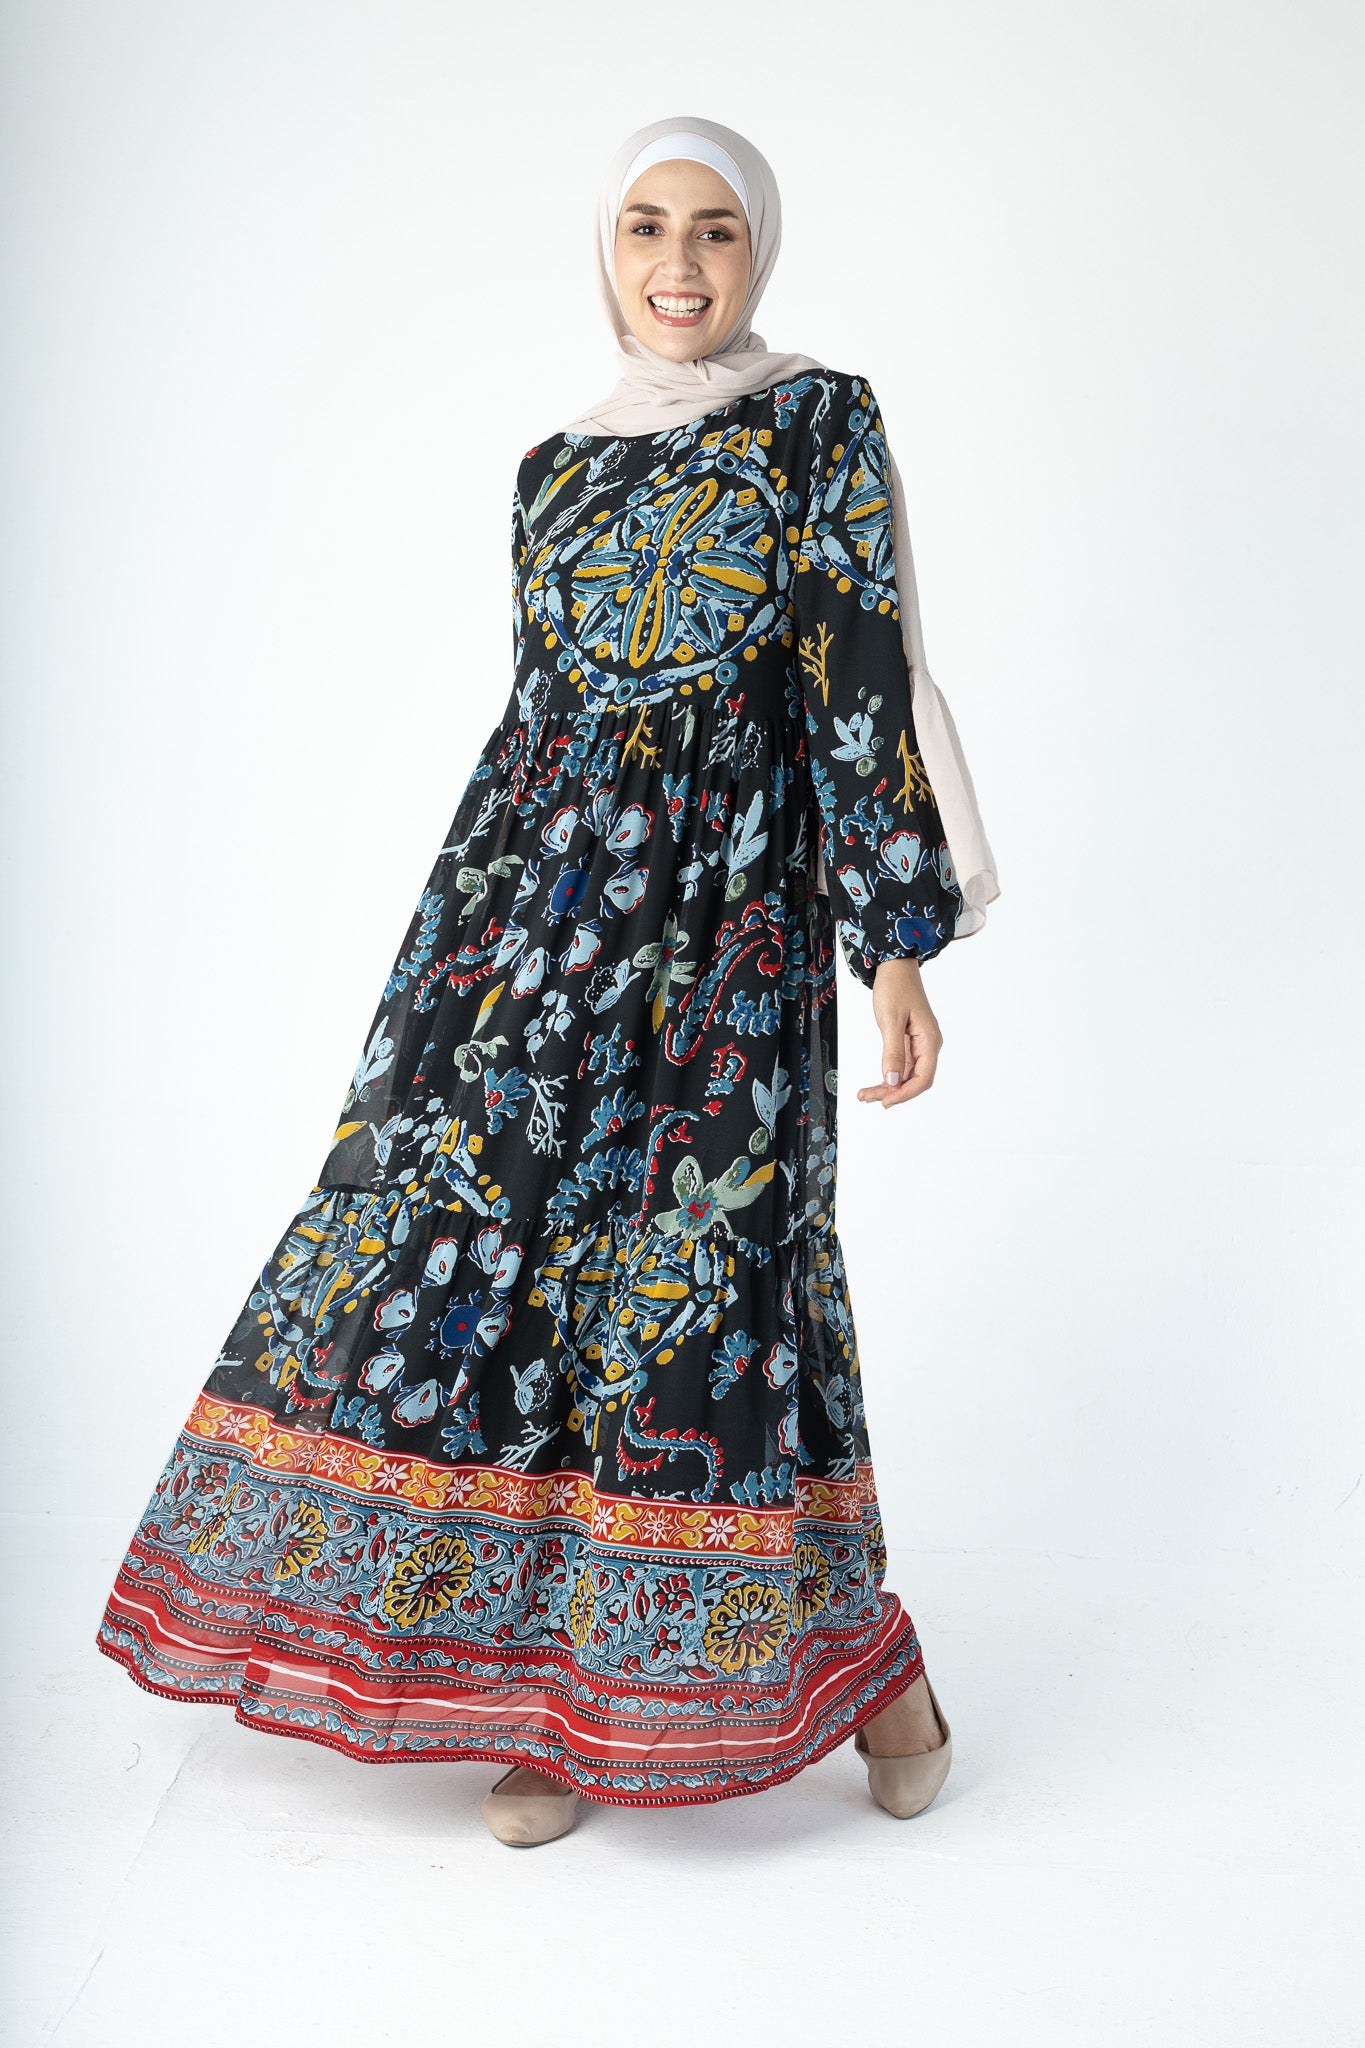 Vintage Floral Chiffon Dress